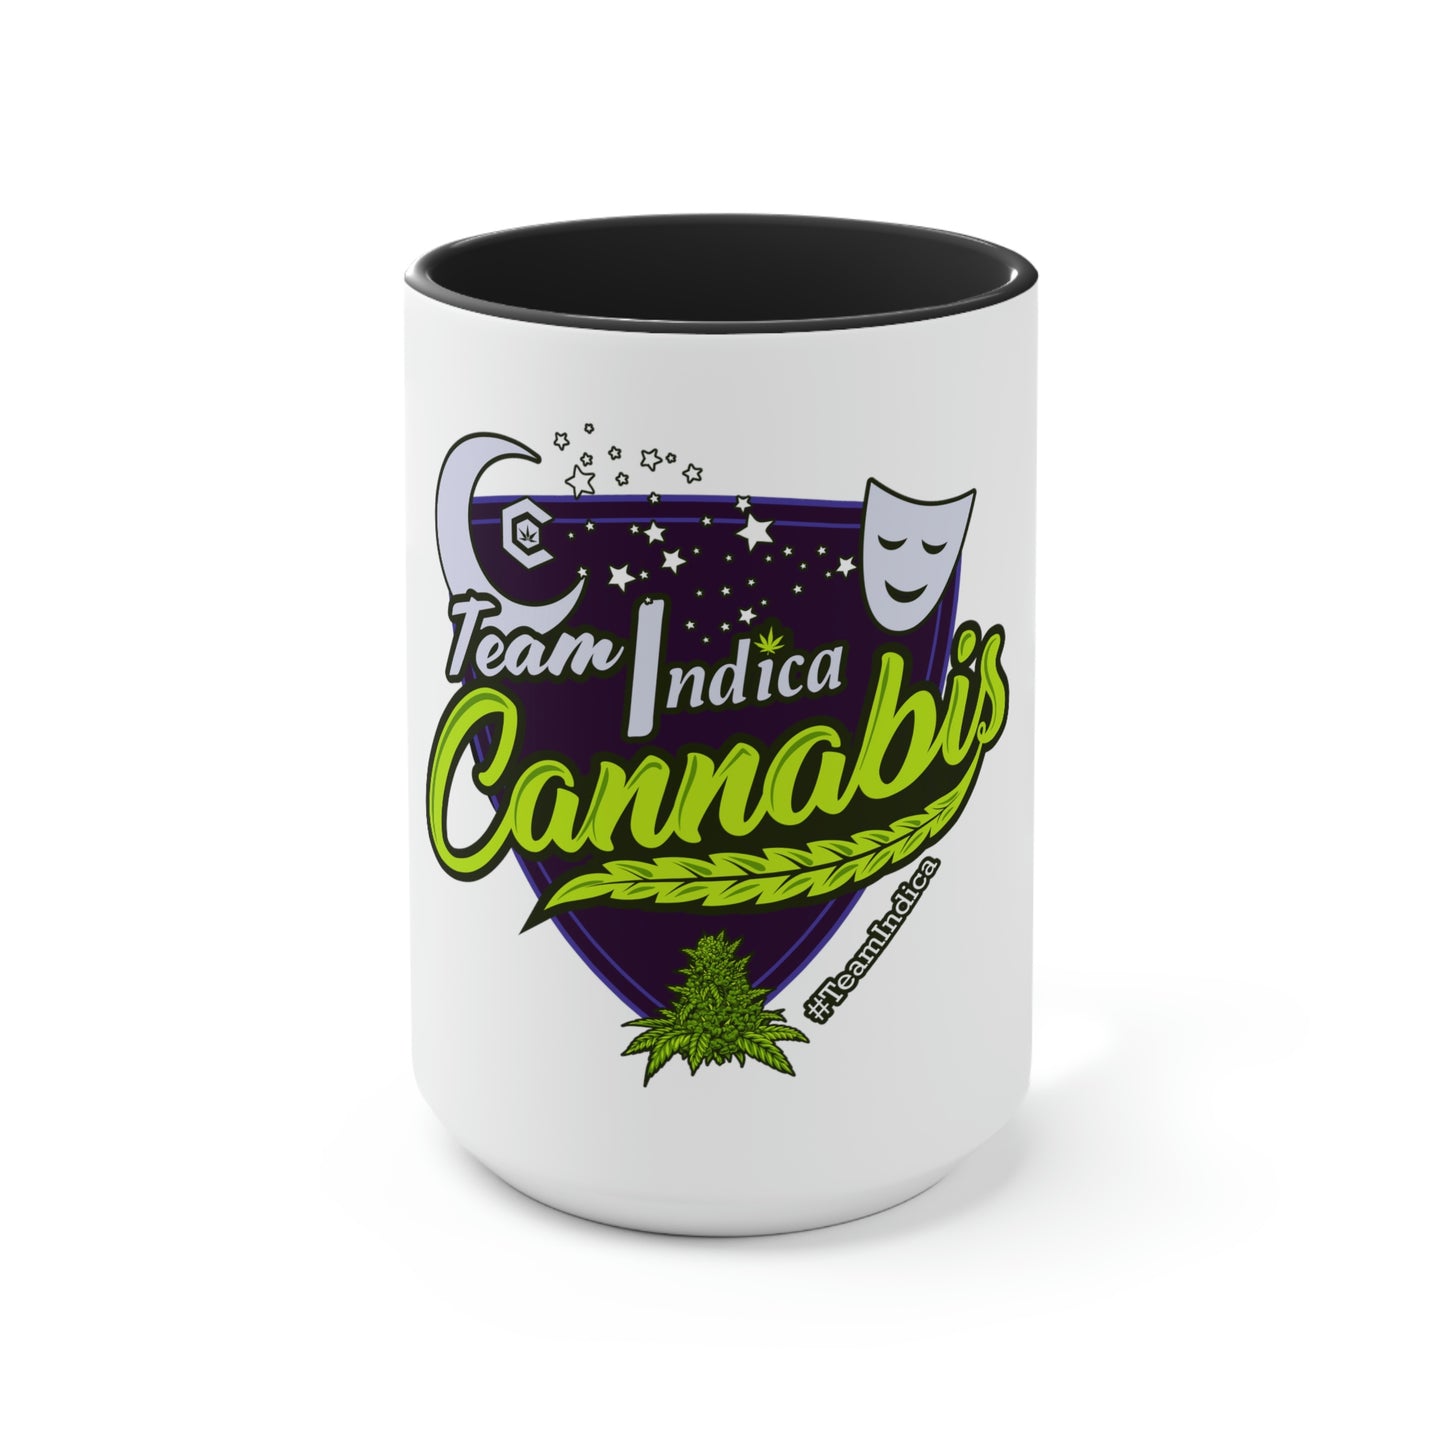 A Team Indica Cannabis Mug with the words 'team judica cannabis' on it.